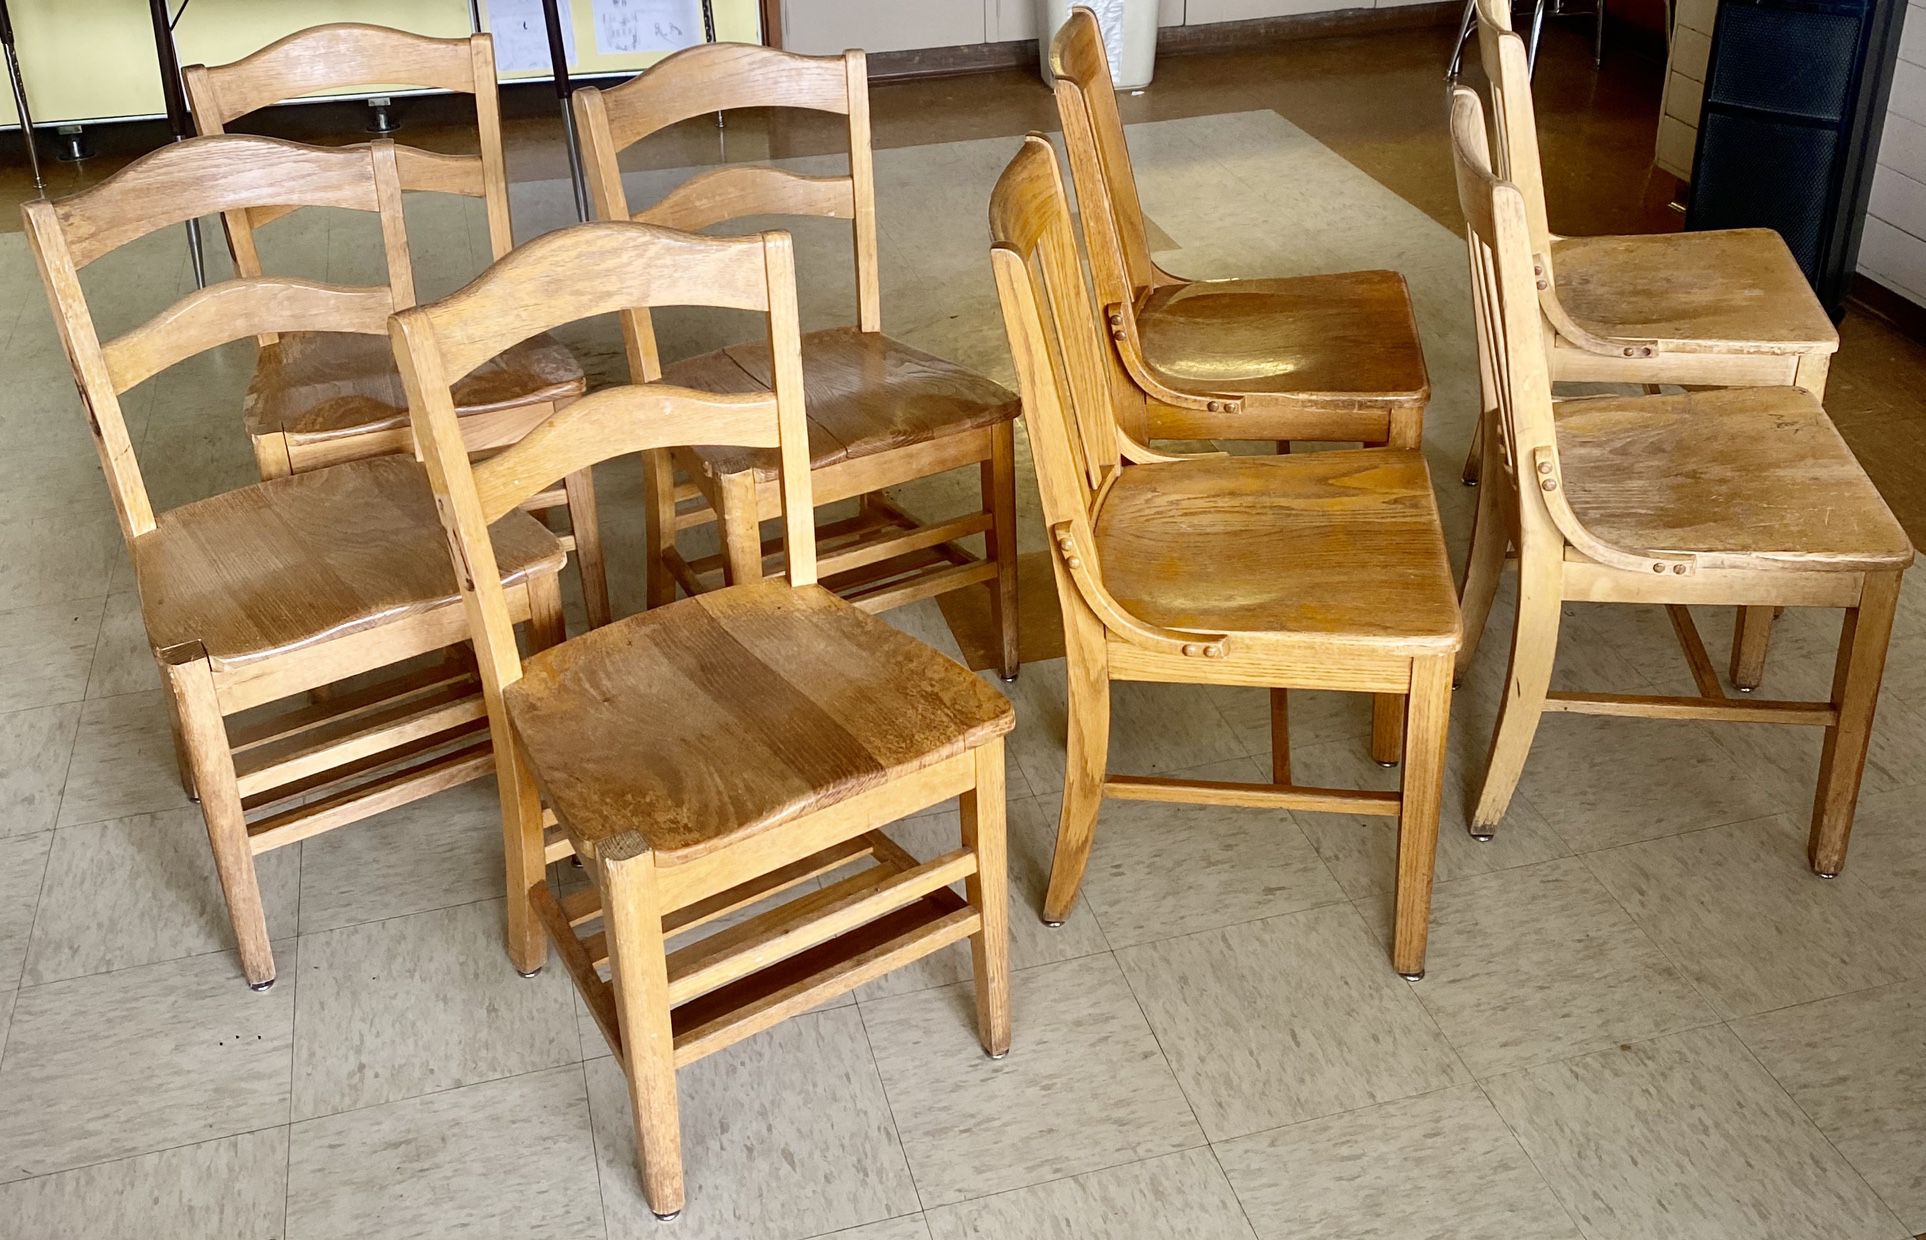 Antique American School Desk Chairs $20 each